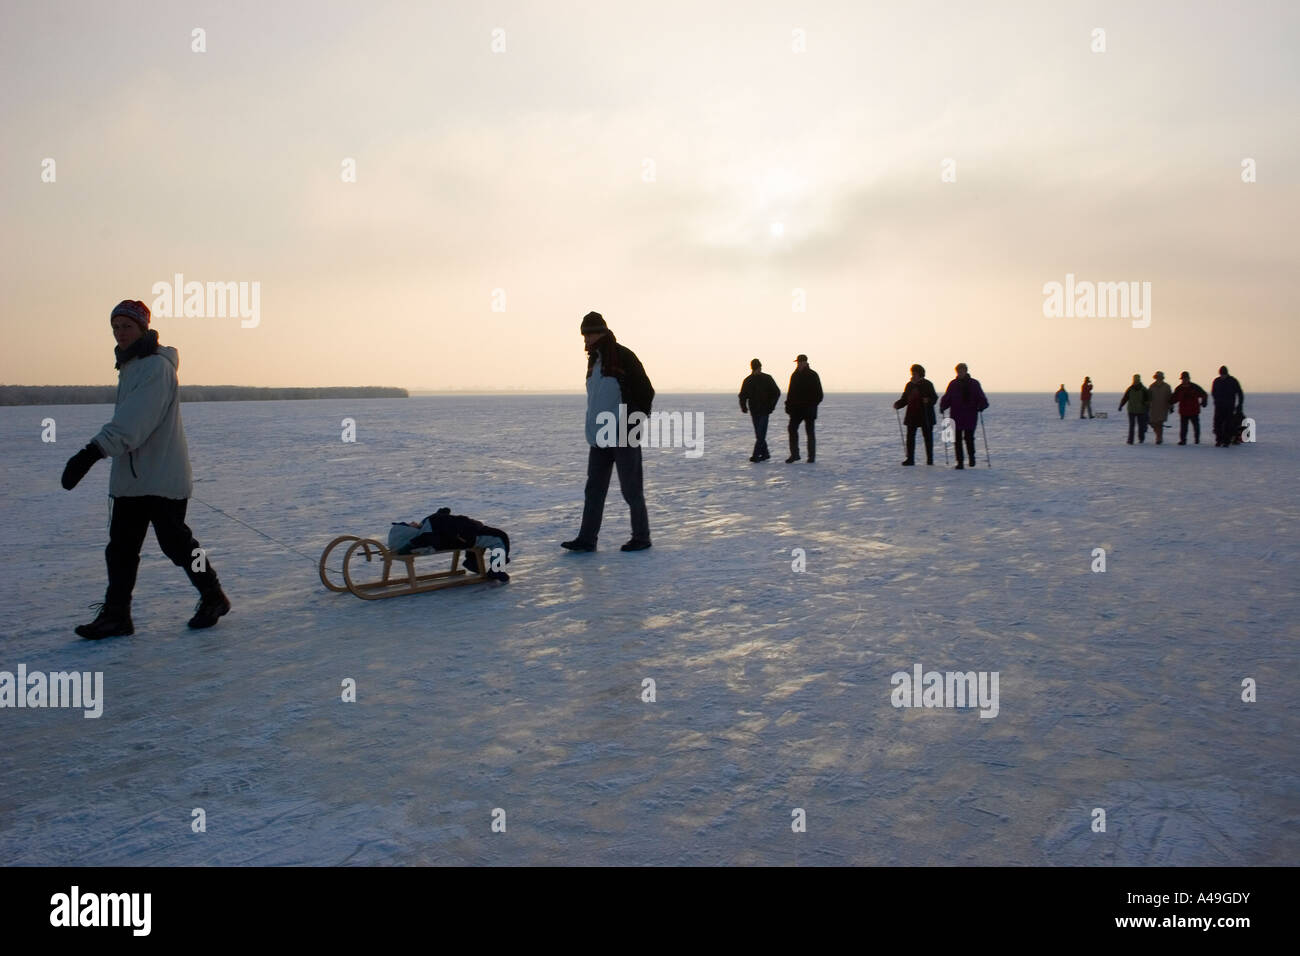 Tourists on the frozen Feder Lake, Bad Buchau, Germany Stock Photo